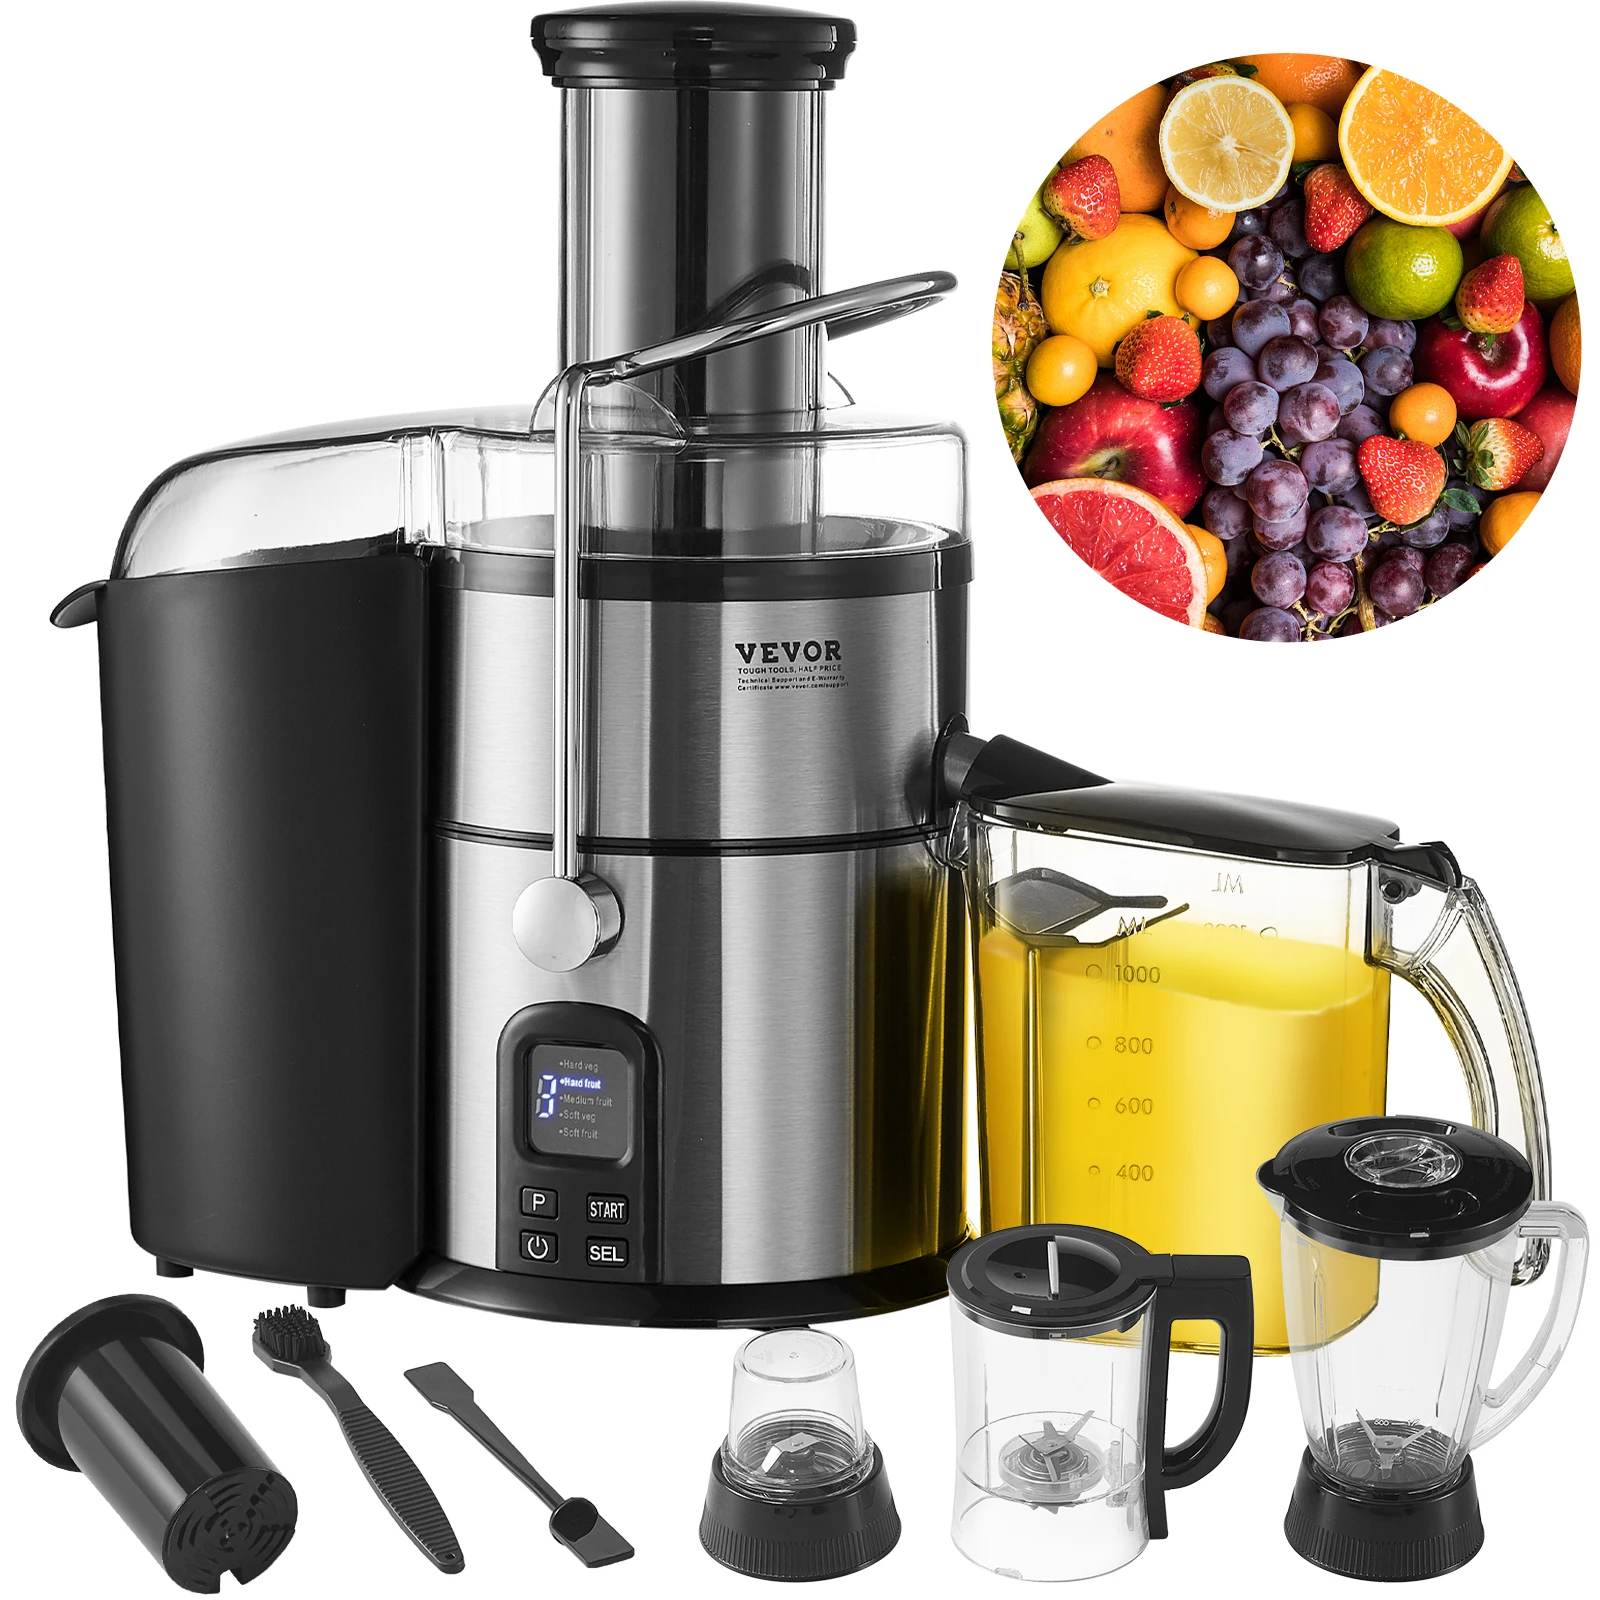 

VEVOR Centrifugal Juicer mixer Machine Fruits Vegetables Juice Extractor portable mini blender 850W 5 Speeds for kitchen Home